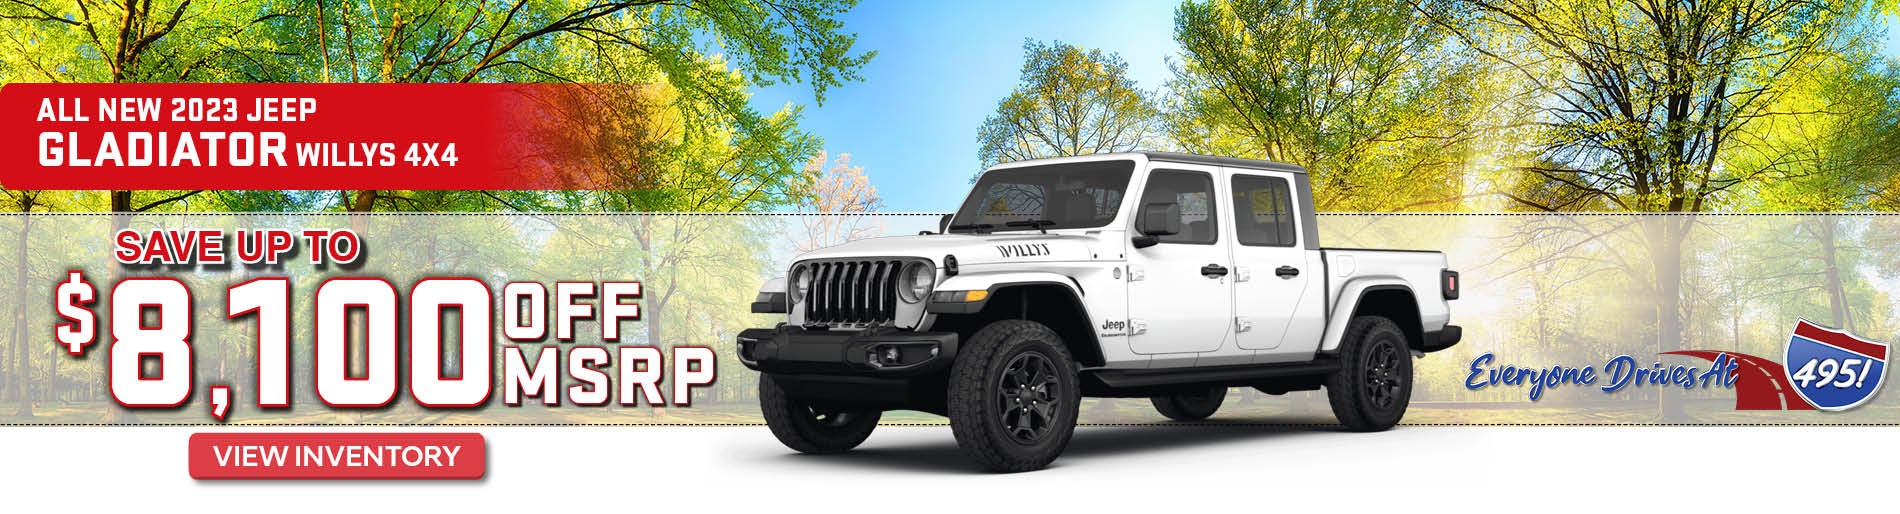 2023 jeep gladiator willys 